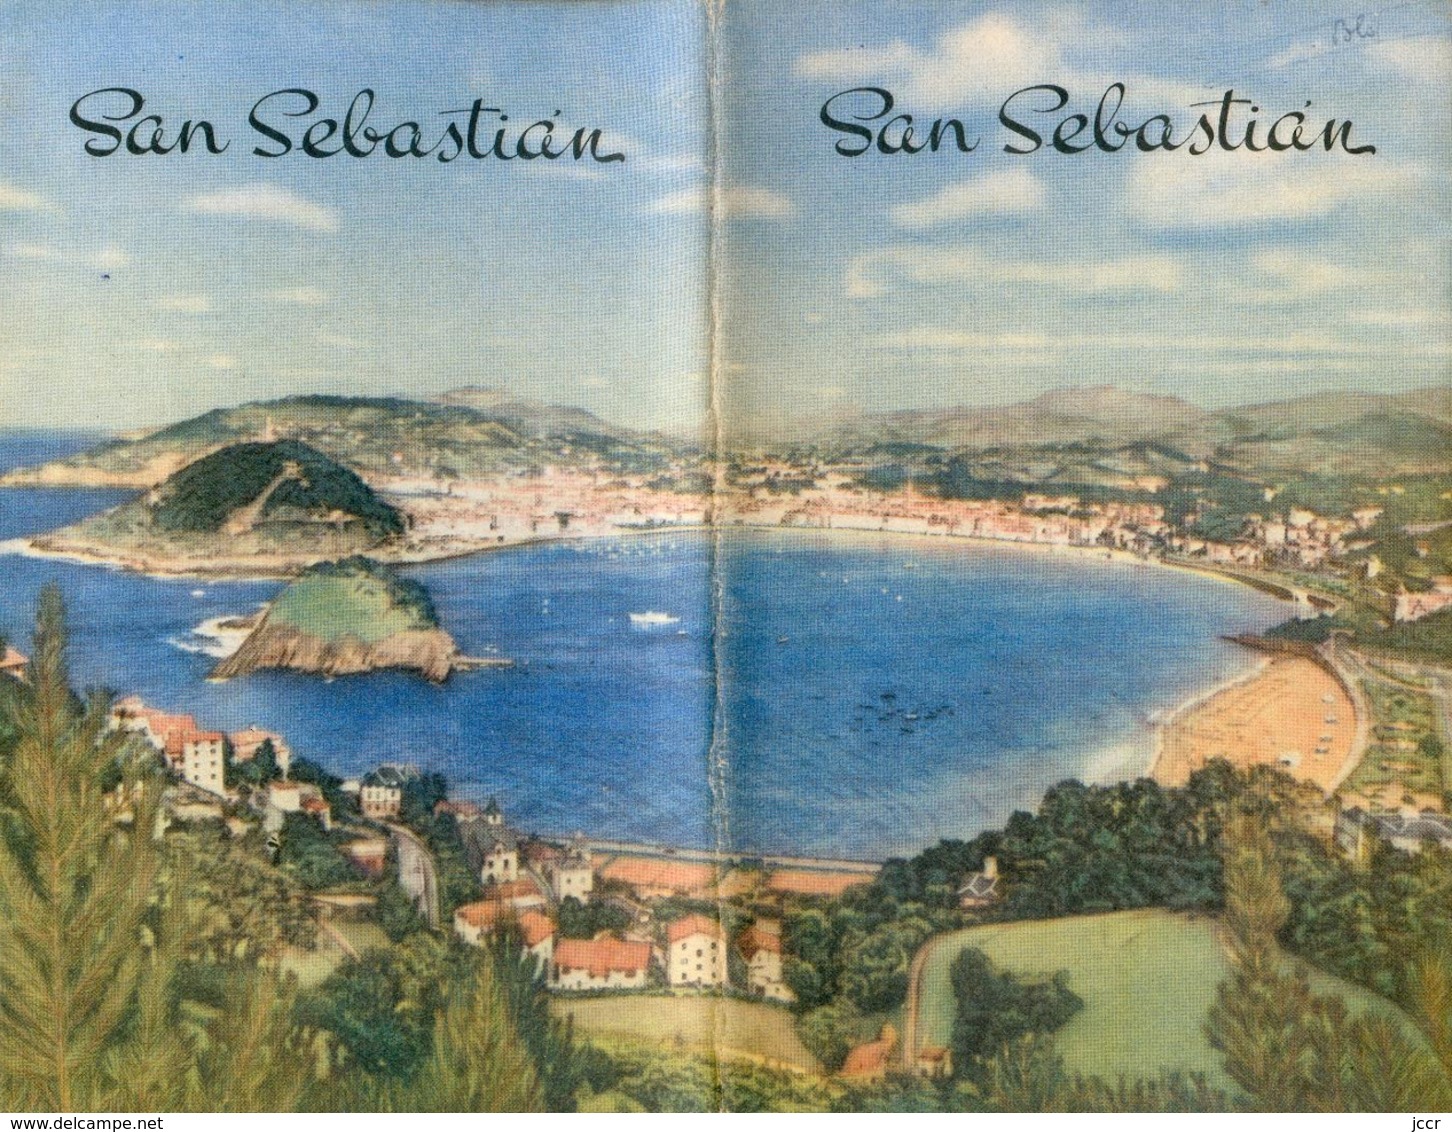 San Sebastian - Guide illustré ancien en espagnol